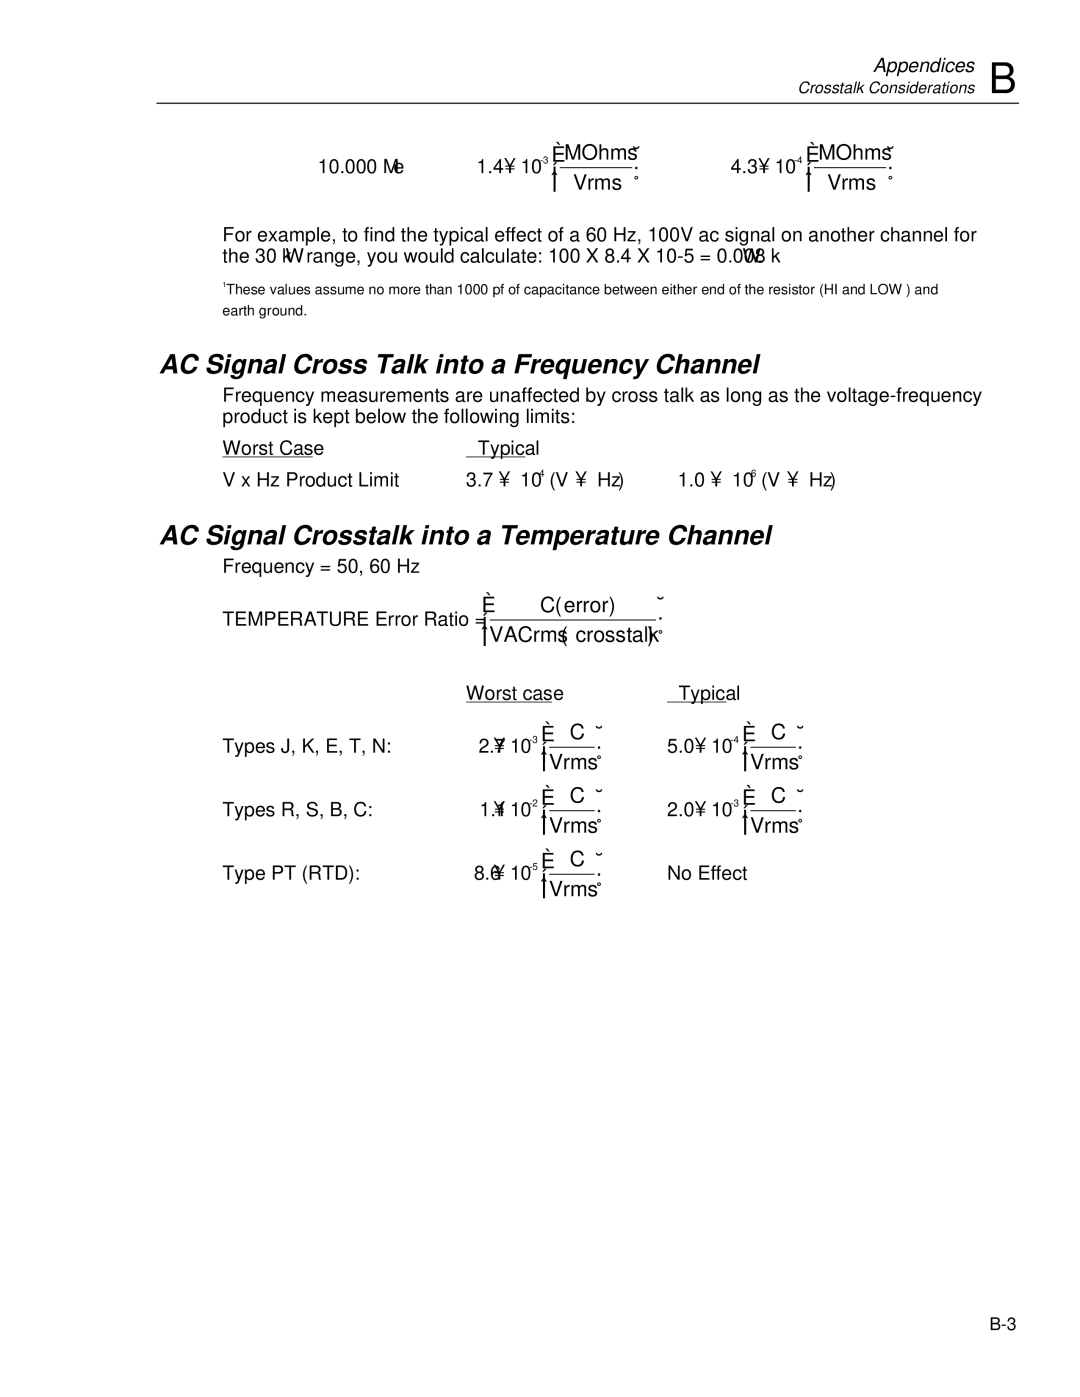 Fluke 2635A user manual AC Signal Cross Talk into a Frequency Channel, AC Signal Crosstalk into a Temperature Channel 